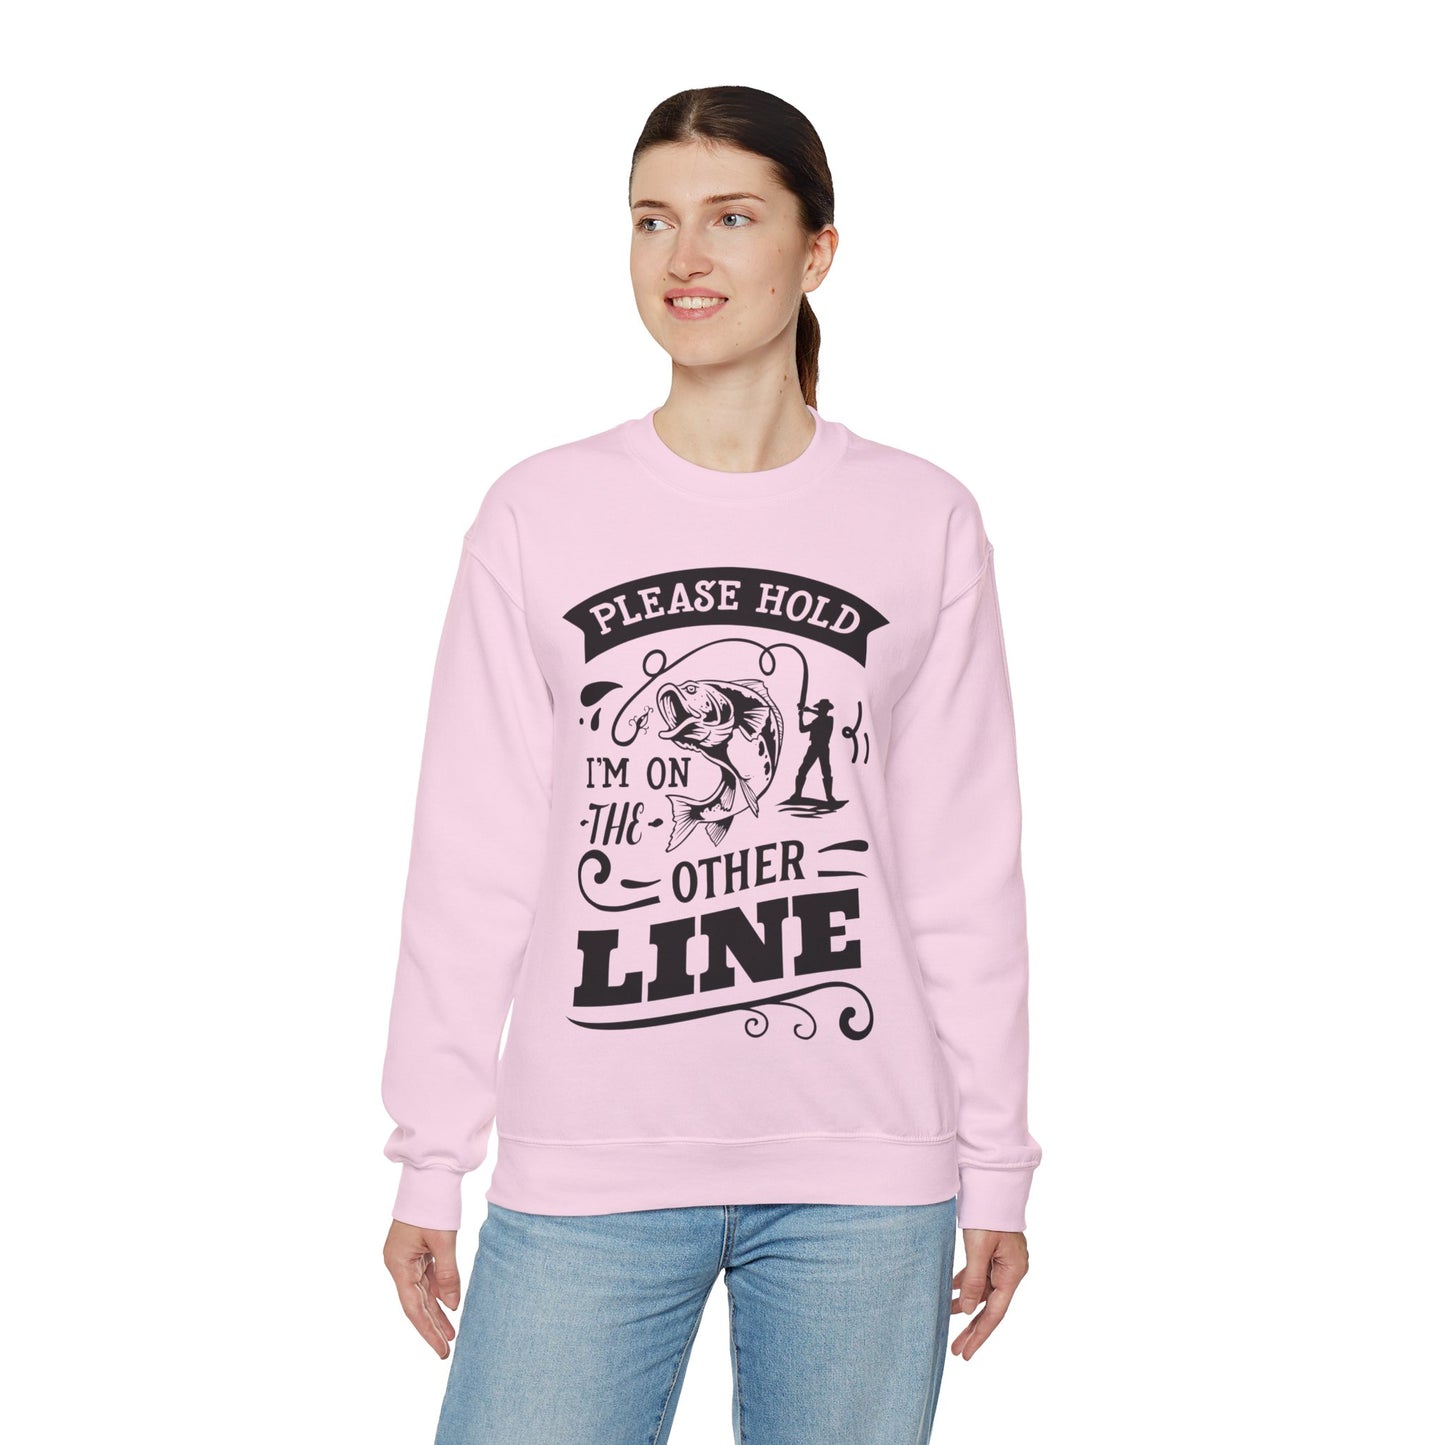 Please hold I'm on another line - Unisex Heavy Blend™ Crewneck Sweatshirt